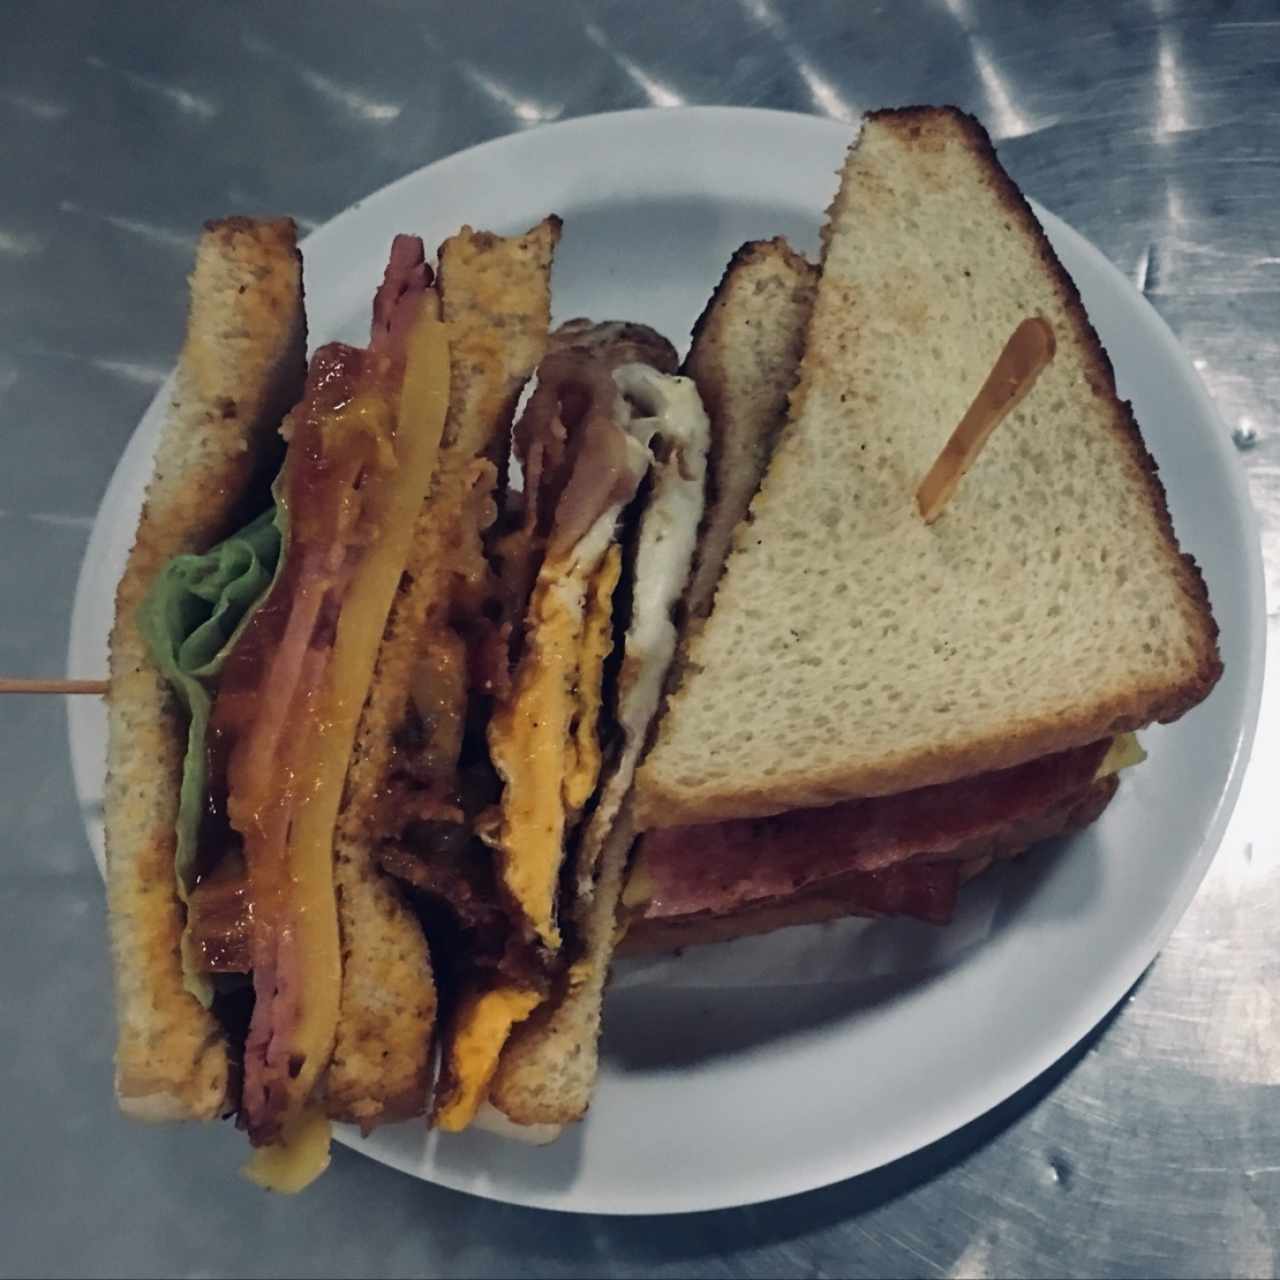 Sandwich con todo